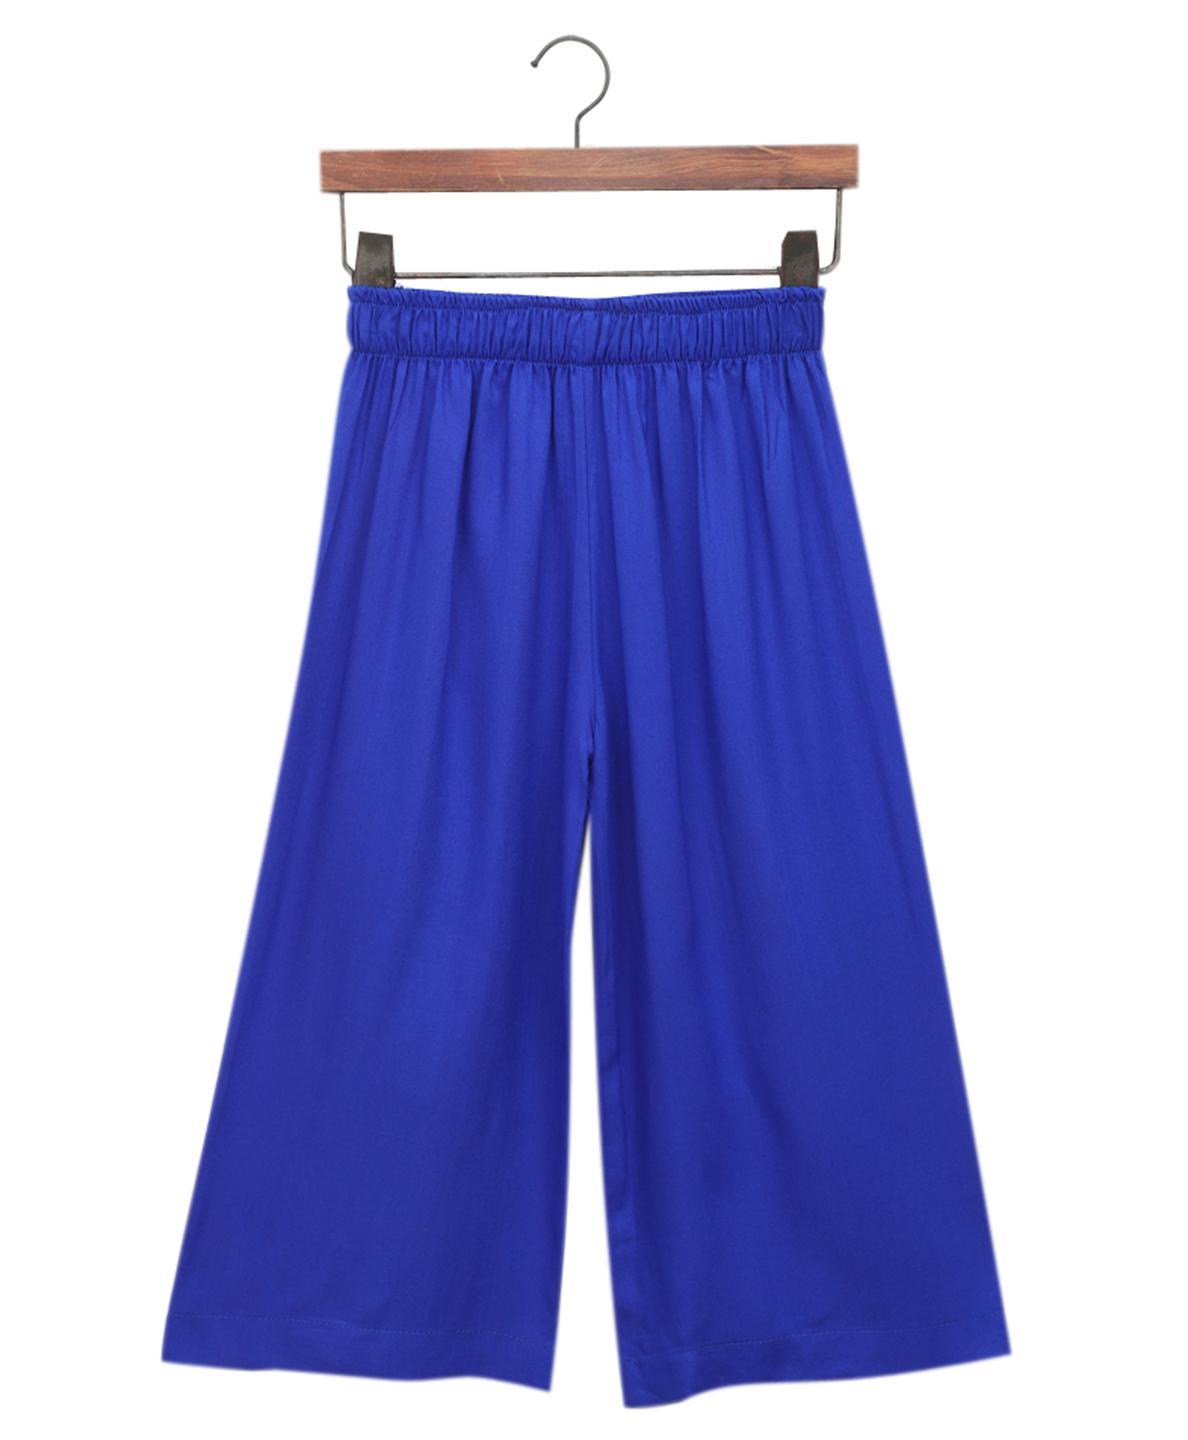 stripe-print-sleeveless-royal-blue-salwarkameez-set-10512007BL, Kids Clothing, Blended,Cotton,Net Girl Palazzo Set